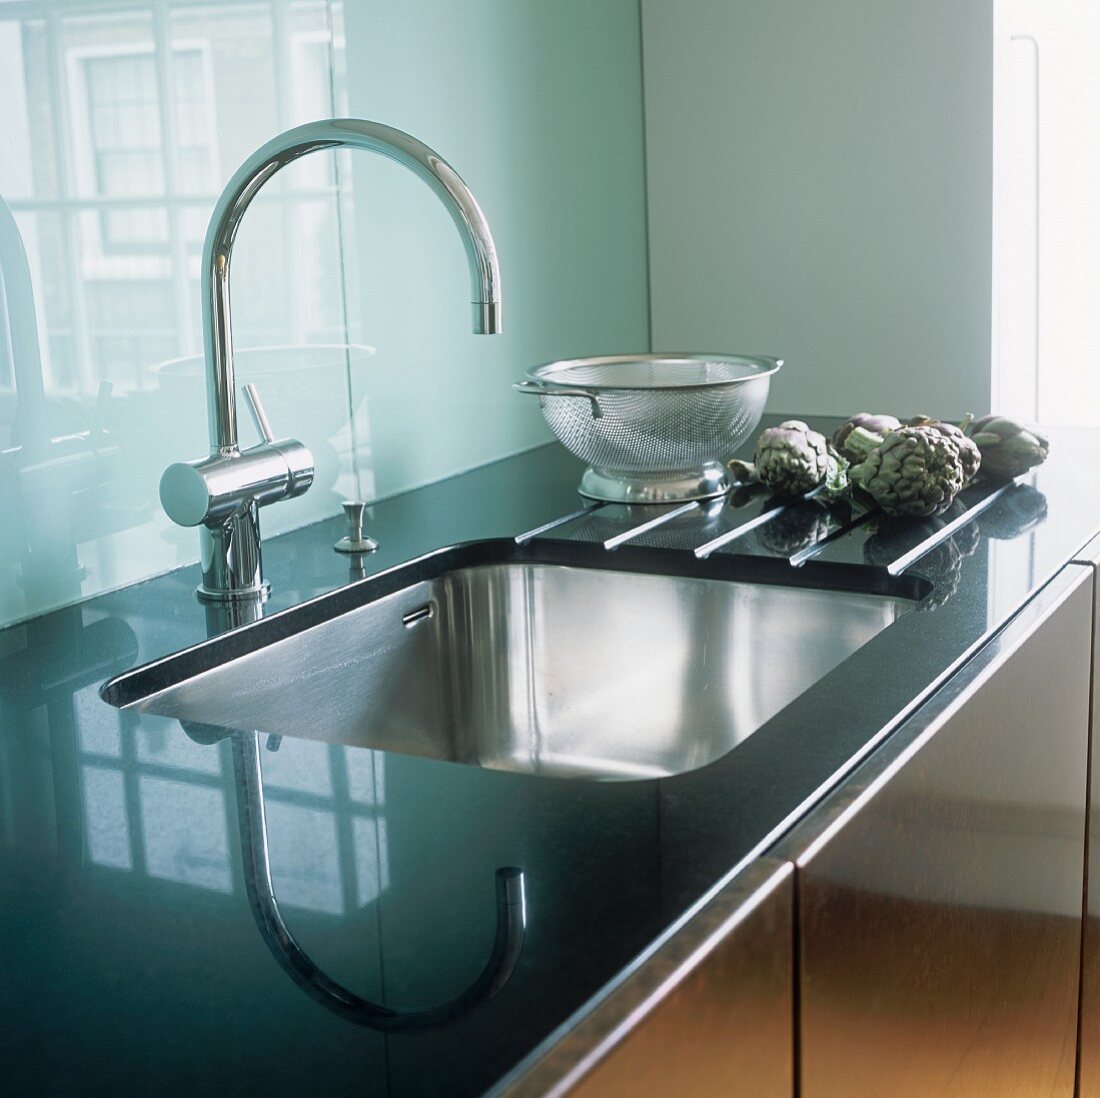 A sink in front of a glass backsplash